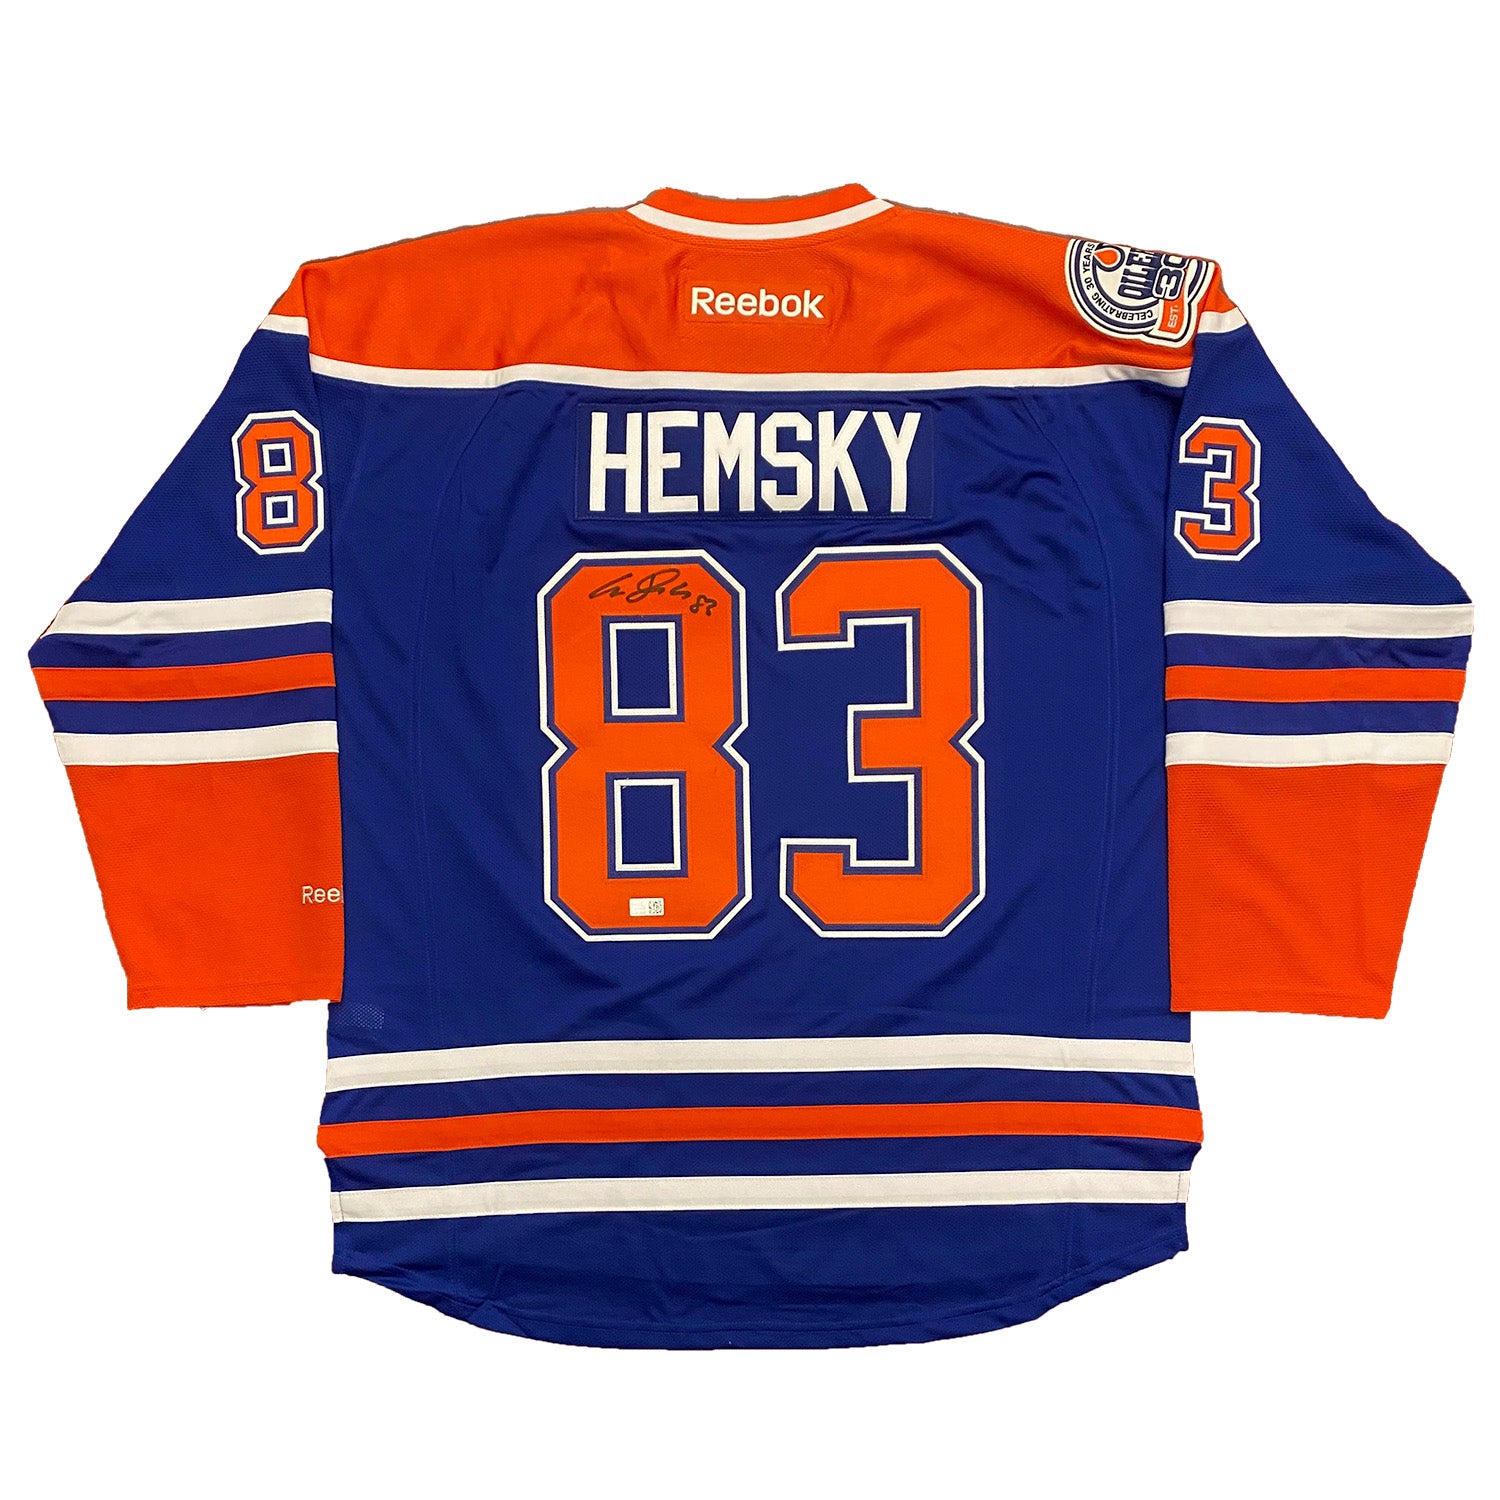 Reebok Edmonton Oilers #83 Hemsky NHL Hockey Jersey Size L